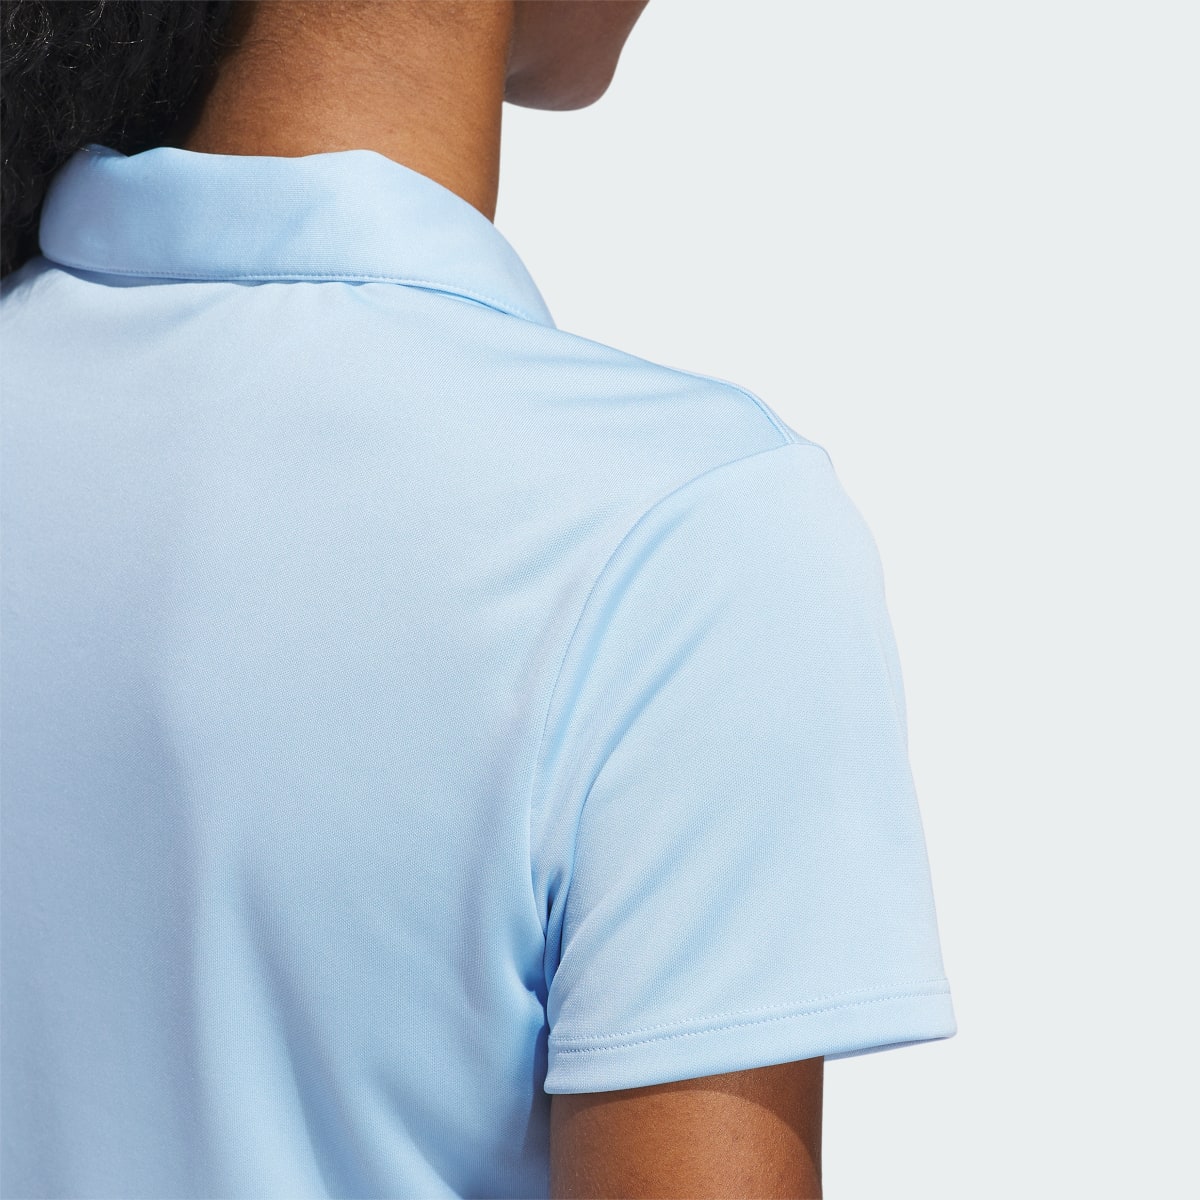 Adidas Women's Solid Performance Short Sleeve Polo Shirt. 5